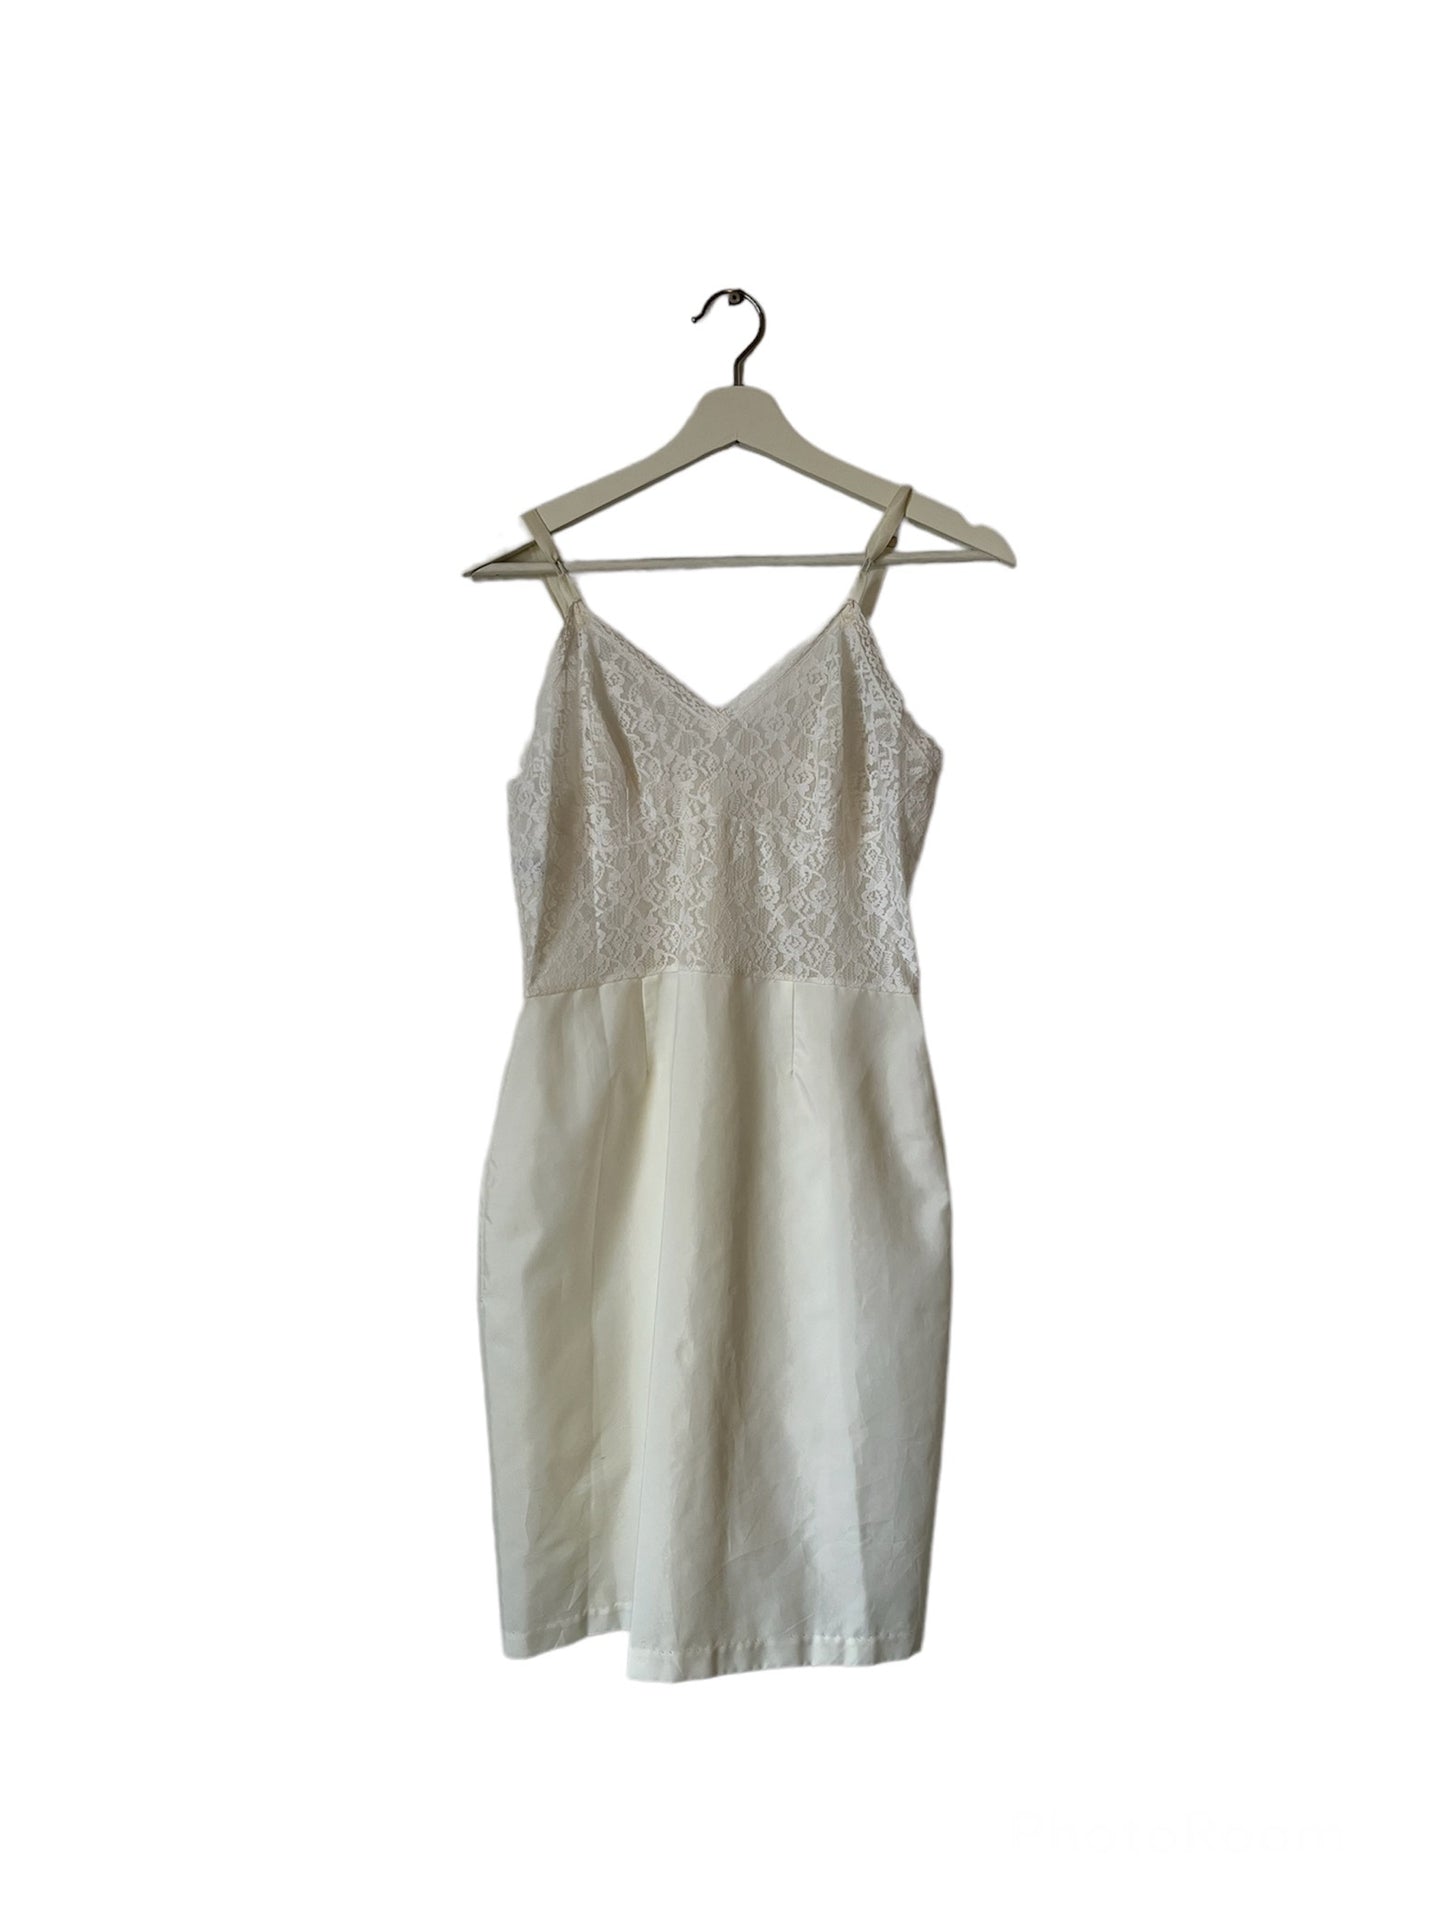 Vintage 1960’s St. Michael Laced Slip Dress - 10/12